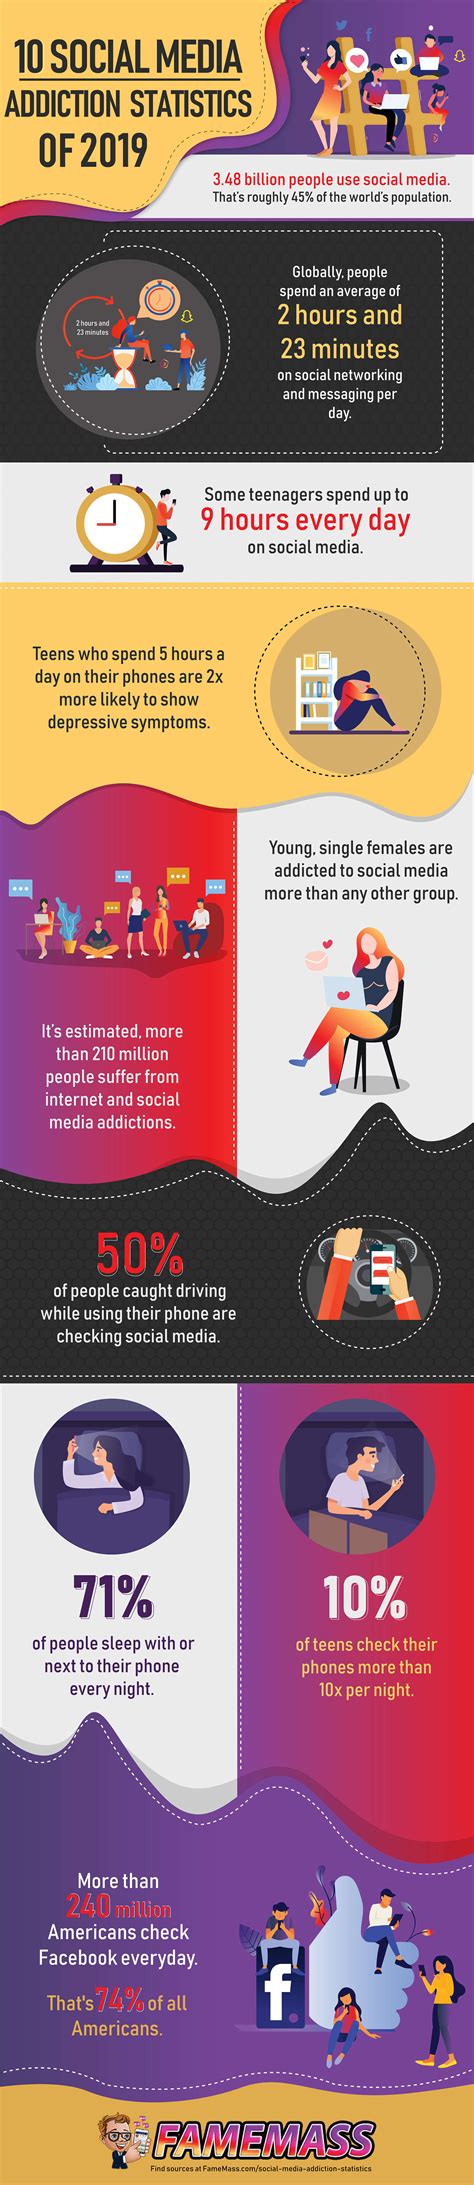 10 Social Media Addiction Statistics Of 2019 Infographic